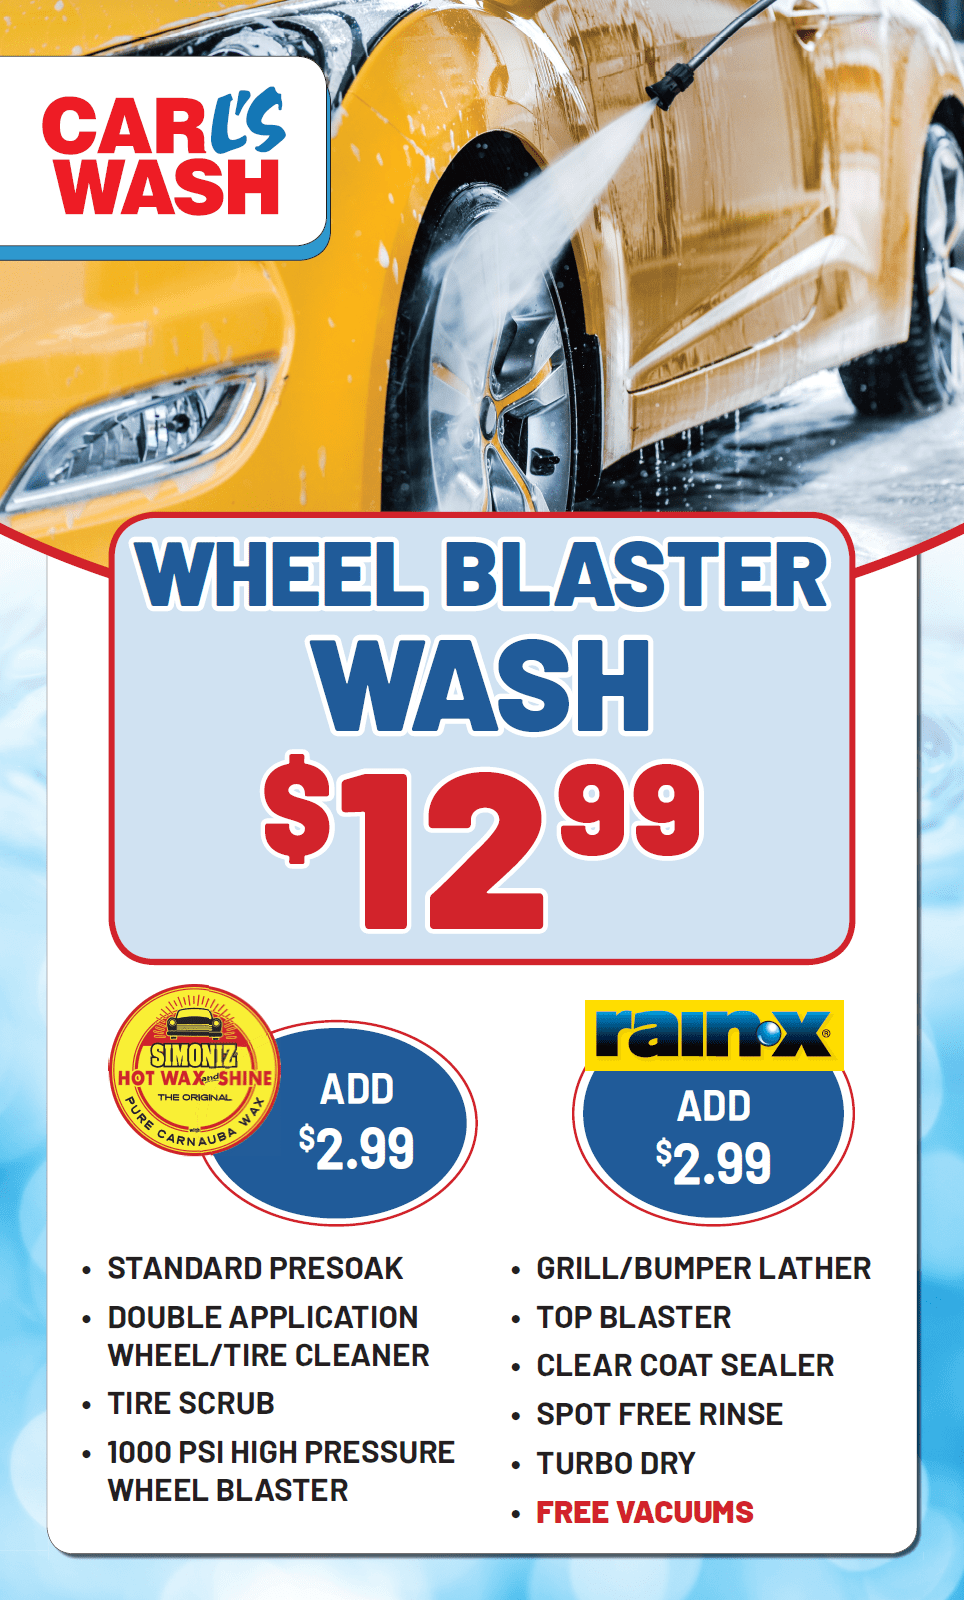 Carls Wash - Wheel Blaster Poster 1-2023 1P1